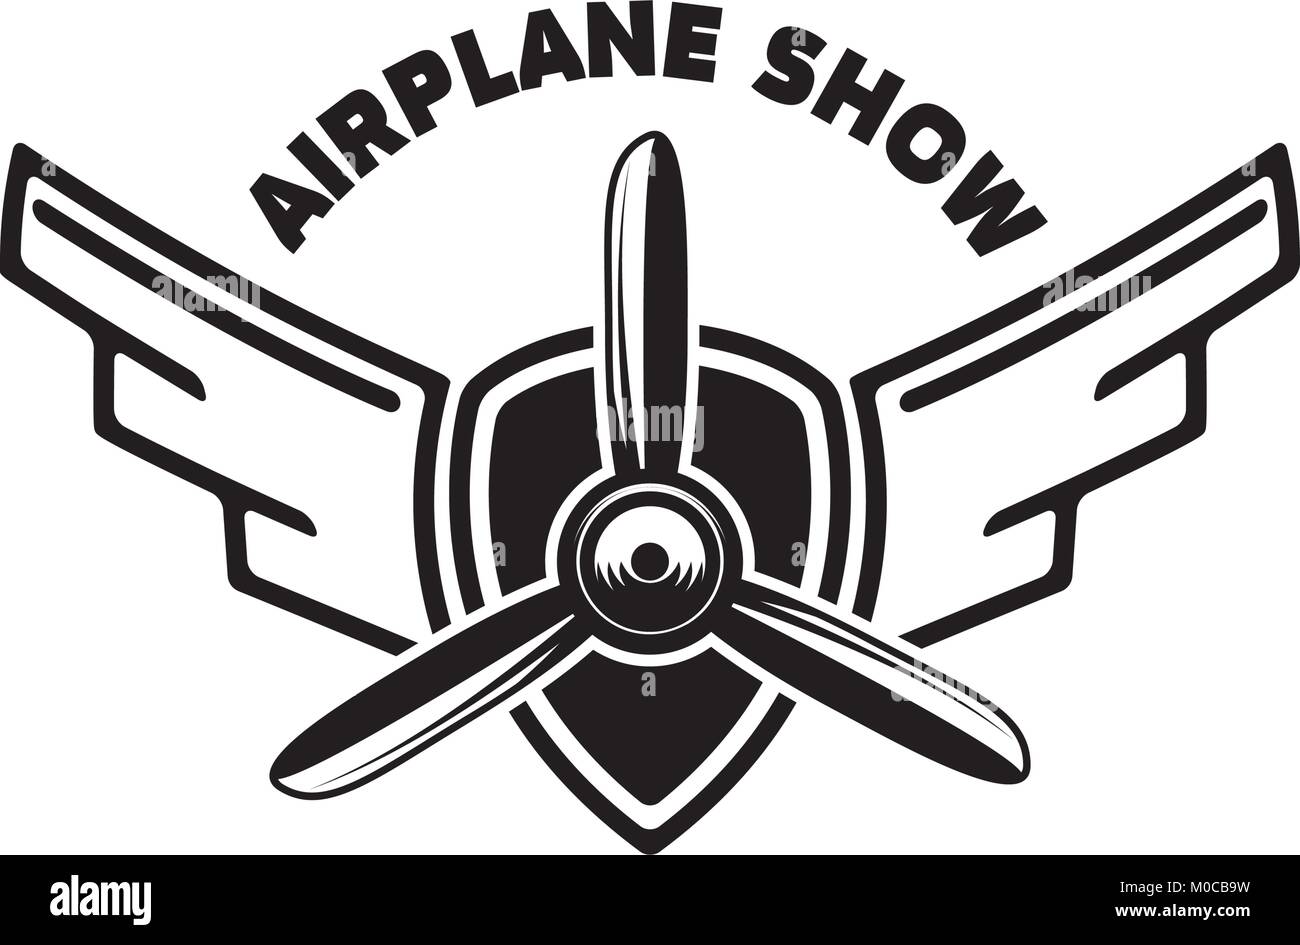 Airplane show. Retro airplane propeller on winged emblem. Design element for logo, label, emblem, sign. Vector illustration Stock Vector